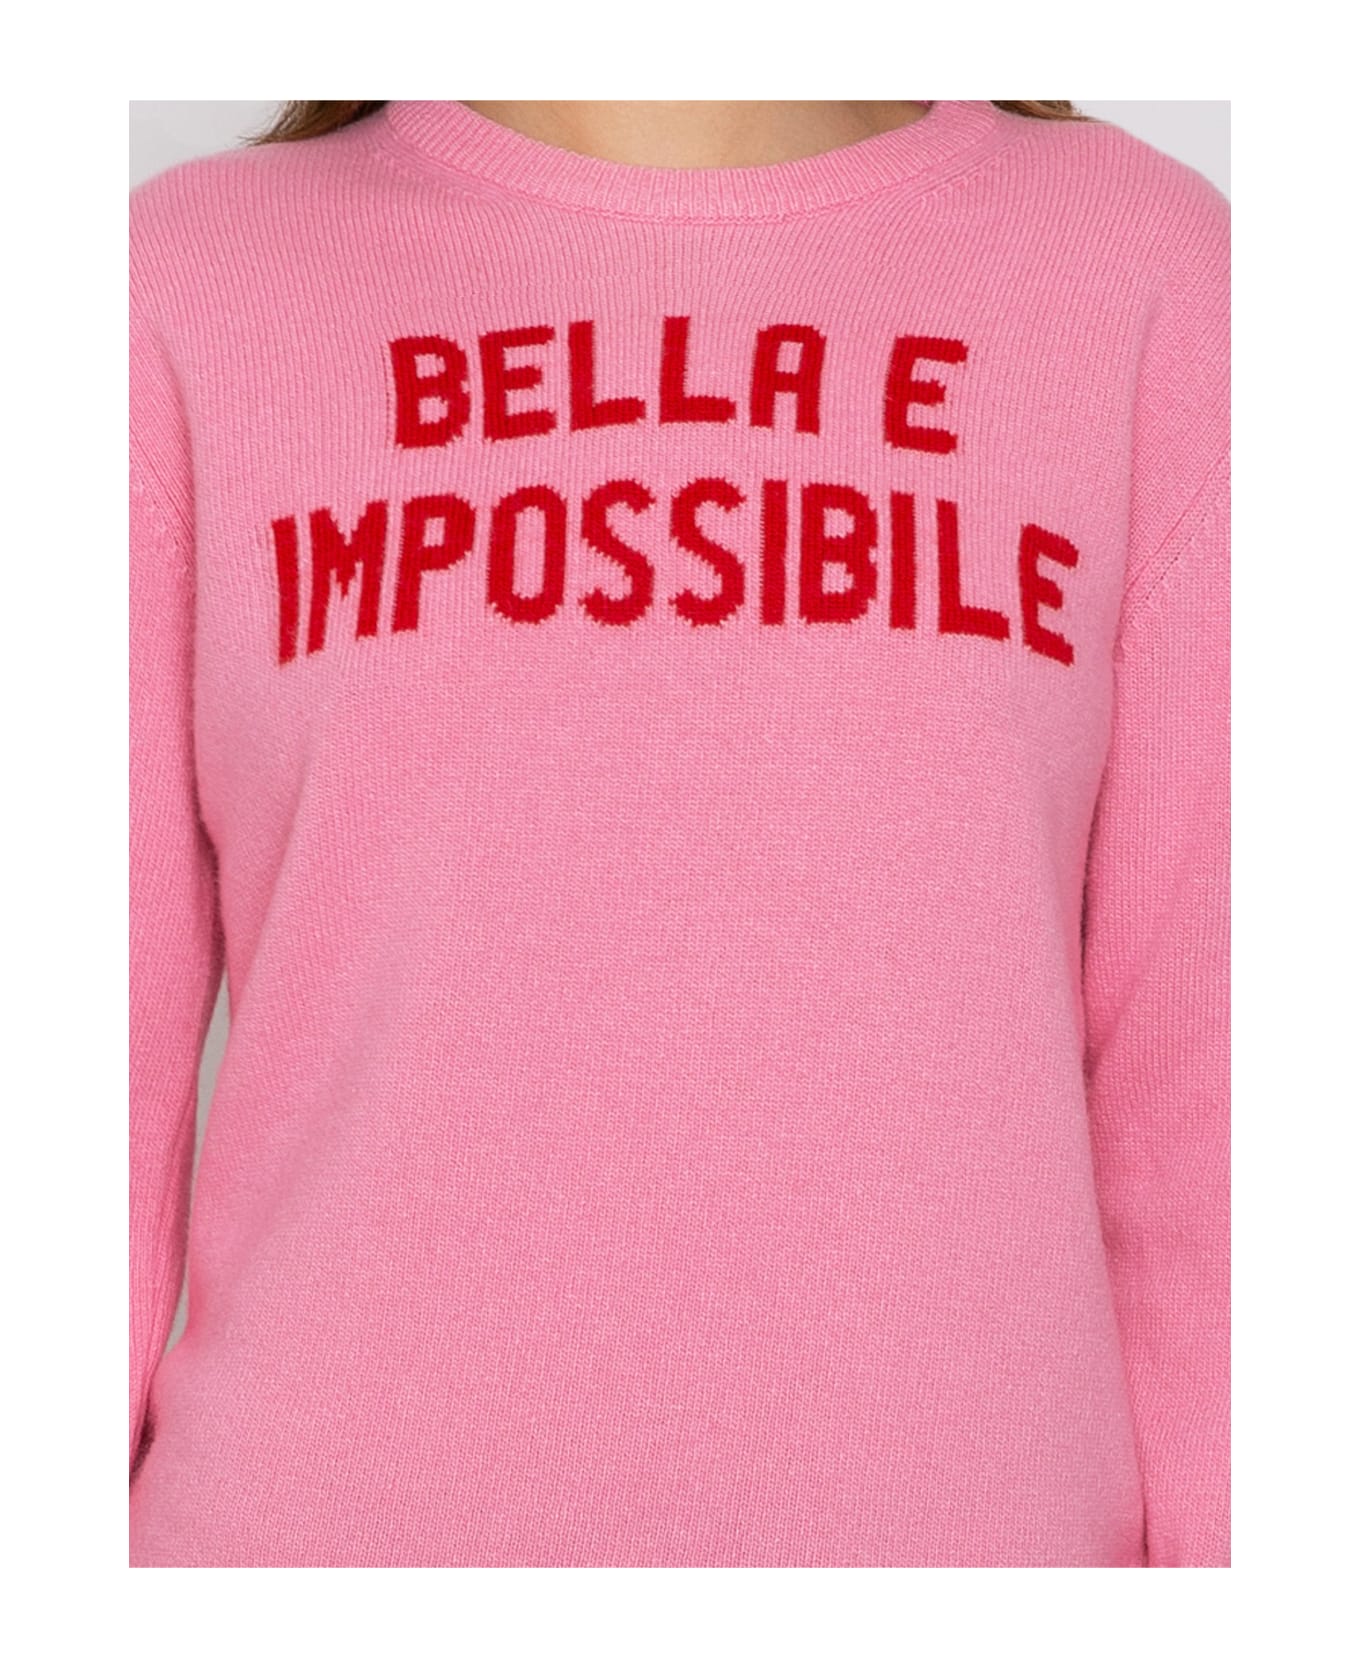 MC2 Saint Barth Woman Sweater With Bella E Impossibile Print - PINK